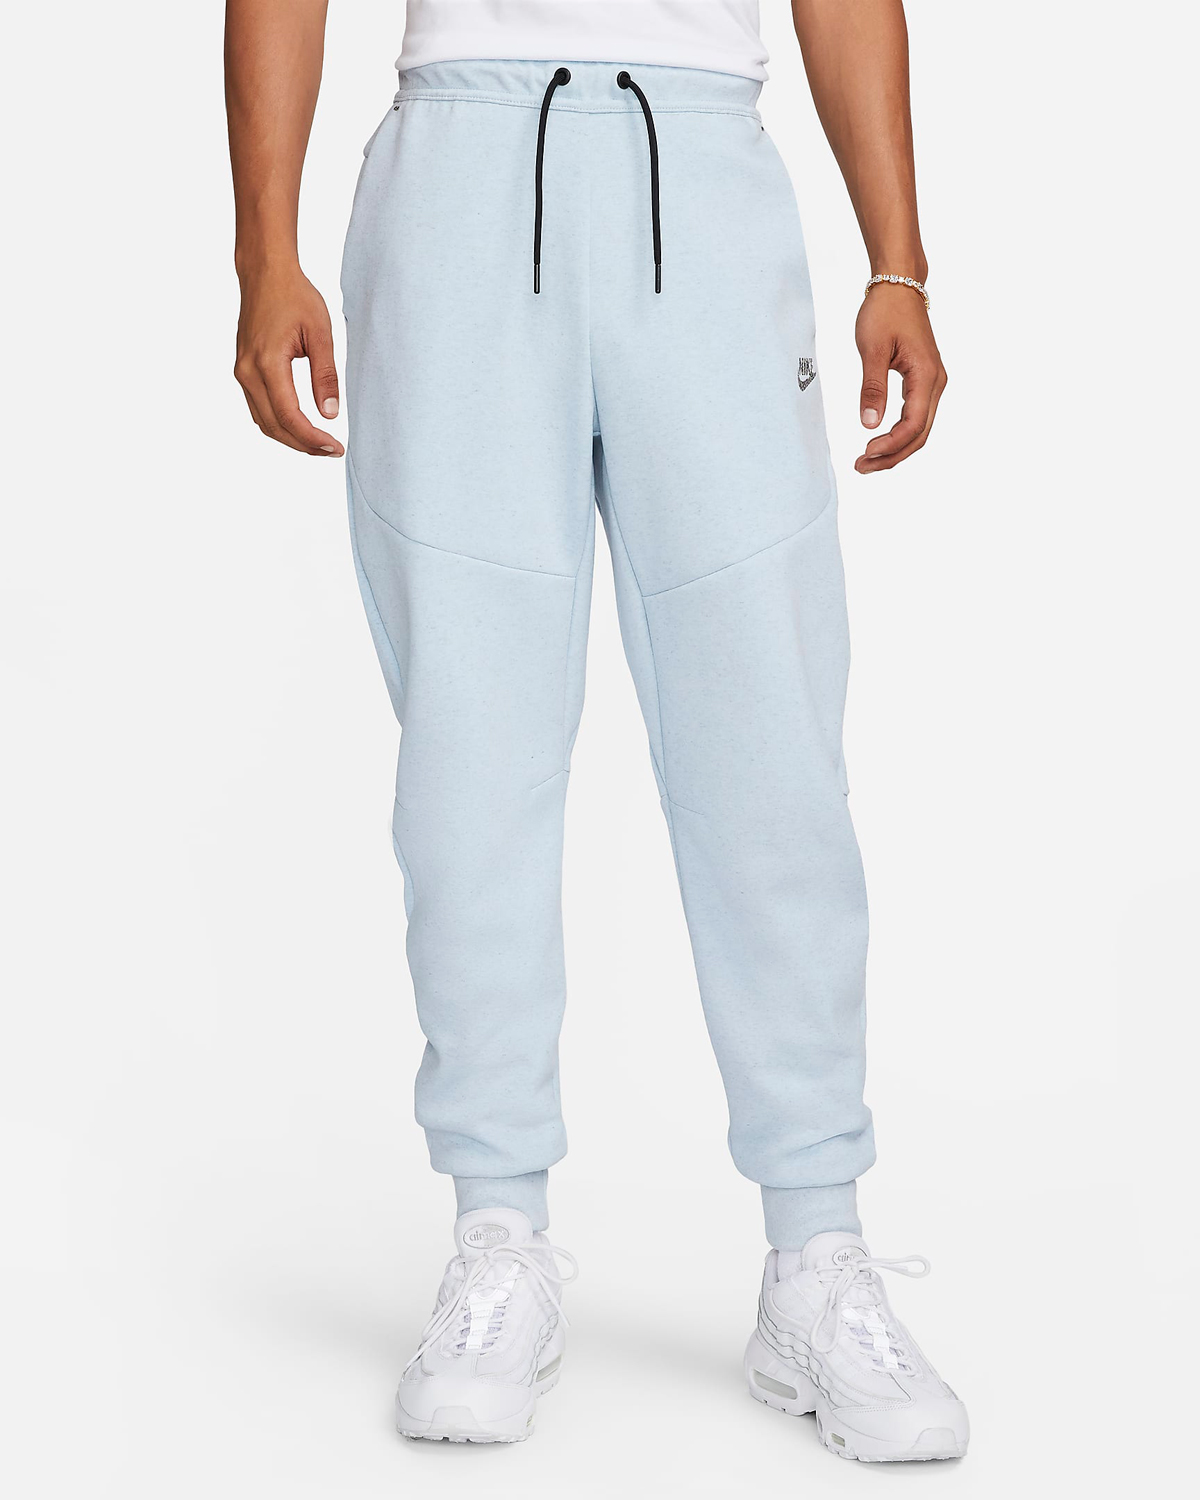 Nike-Tech-Fleece-Jogger-Pants-Celestine-Blue